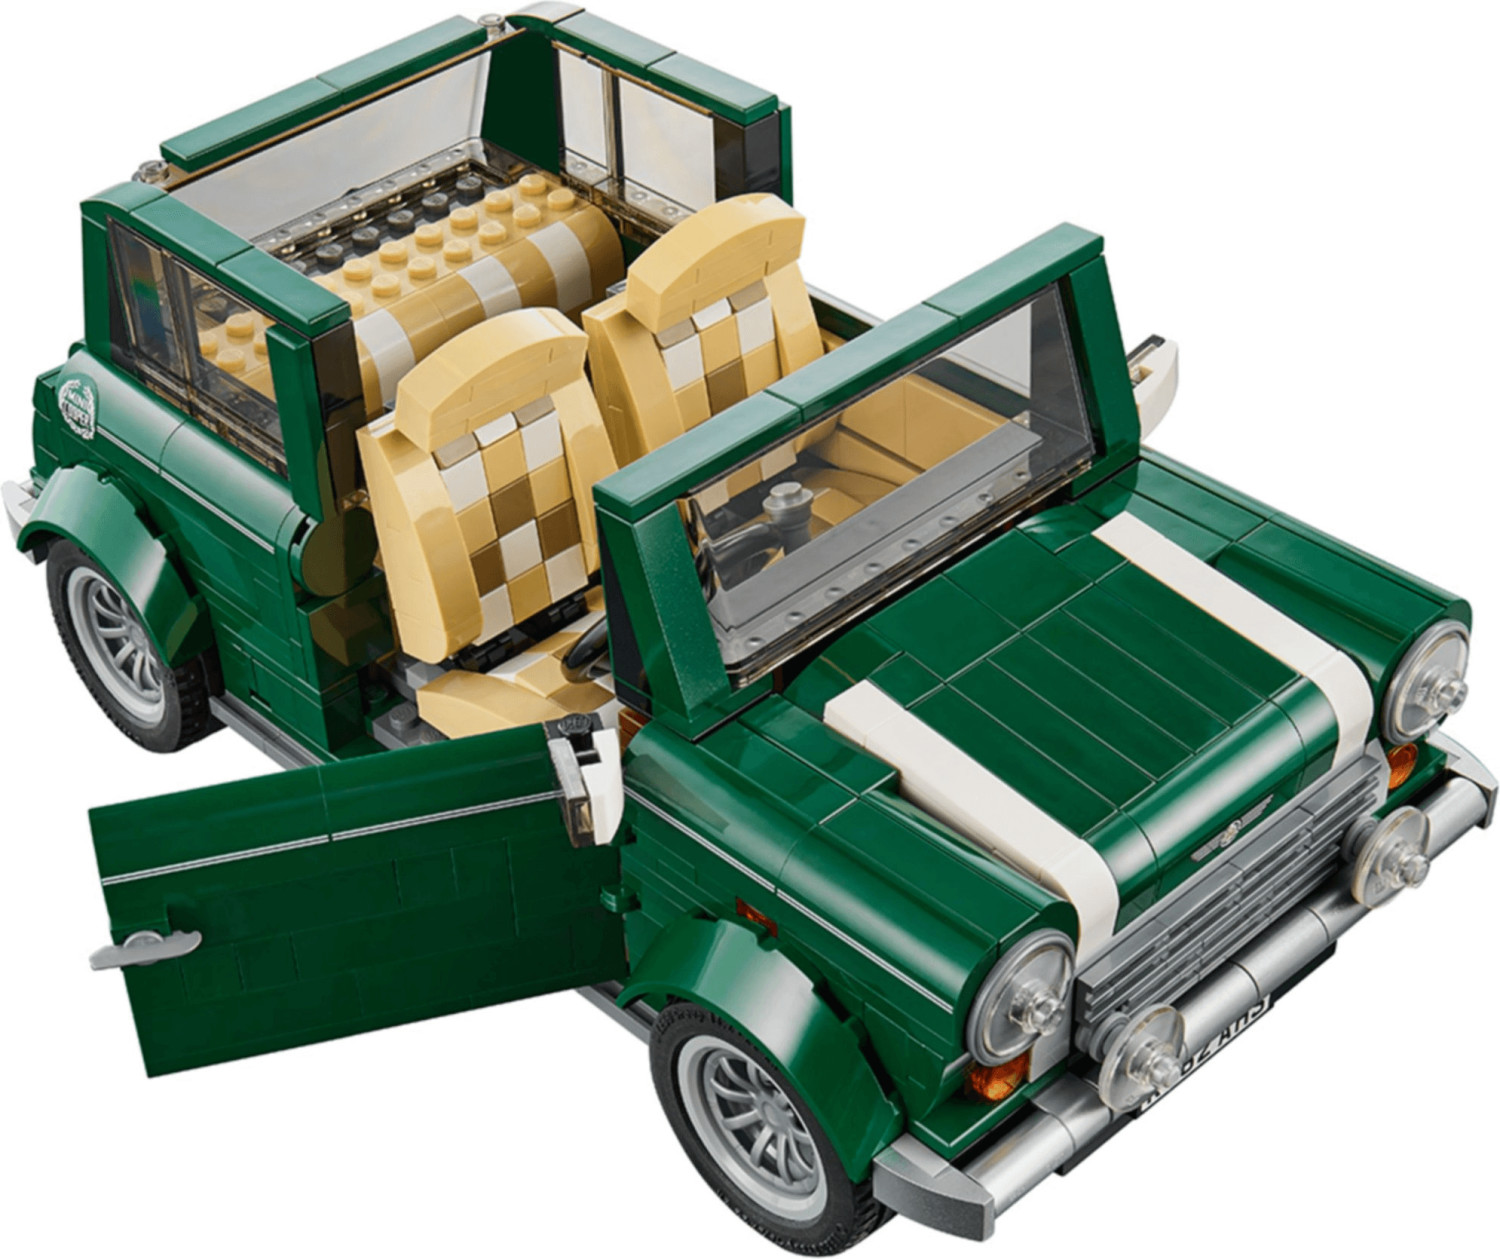 LEGO CREATOR 10242 ミニクーパー - 知育玩具